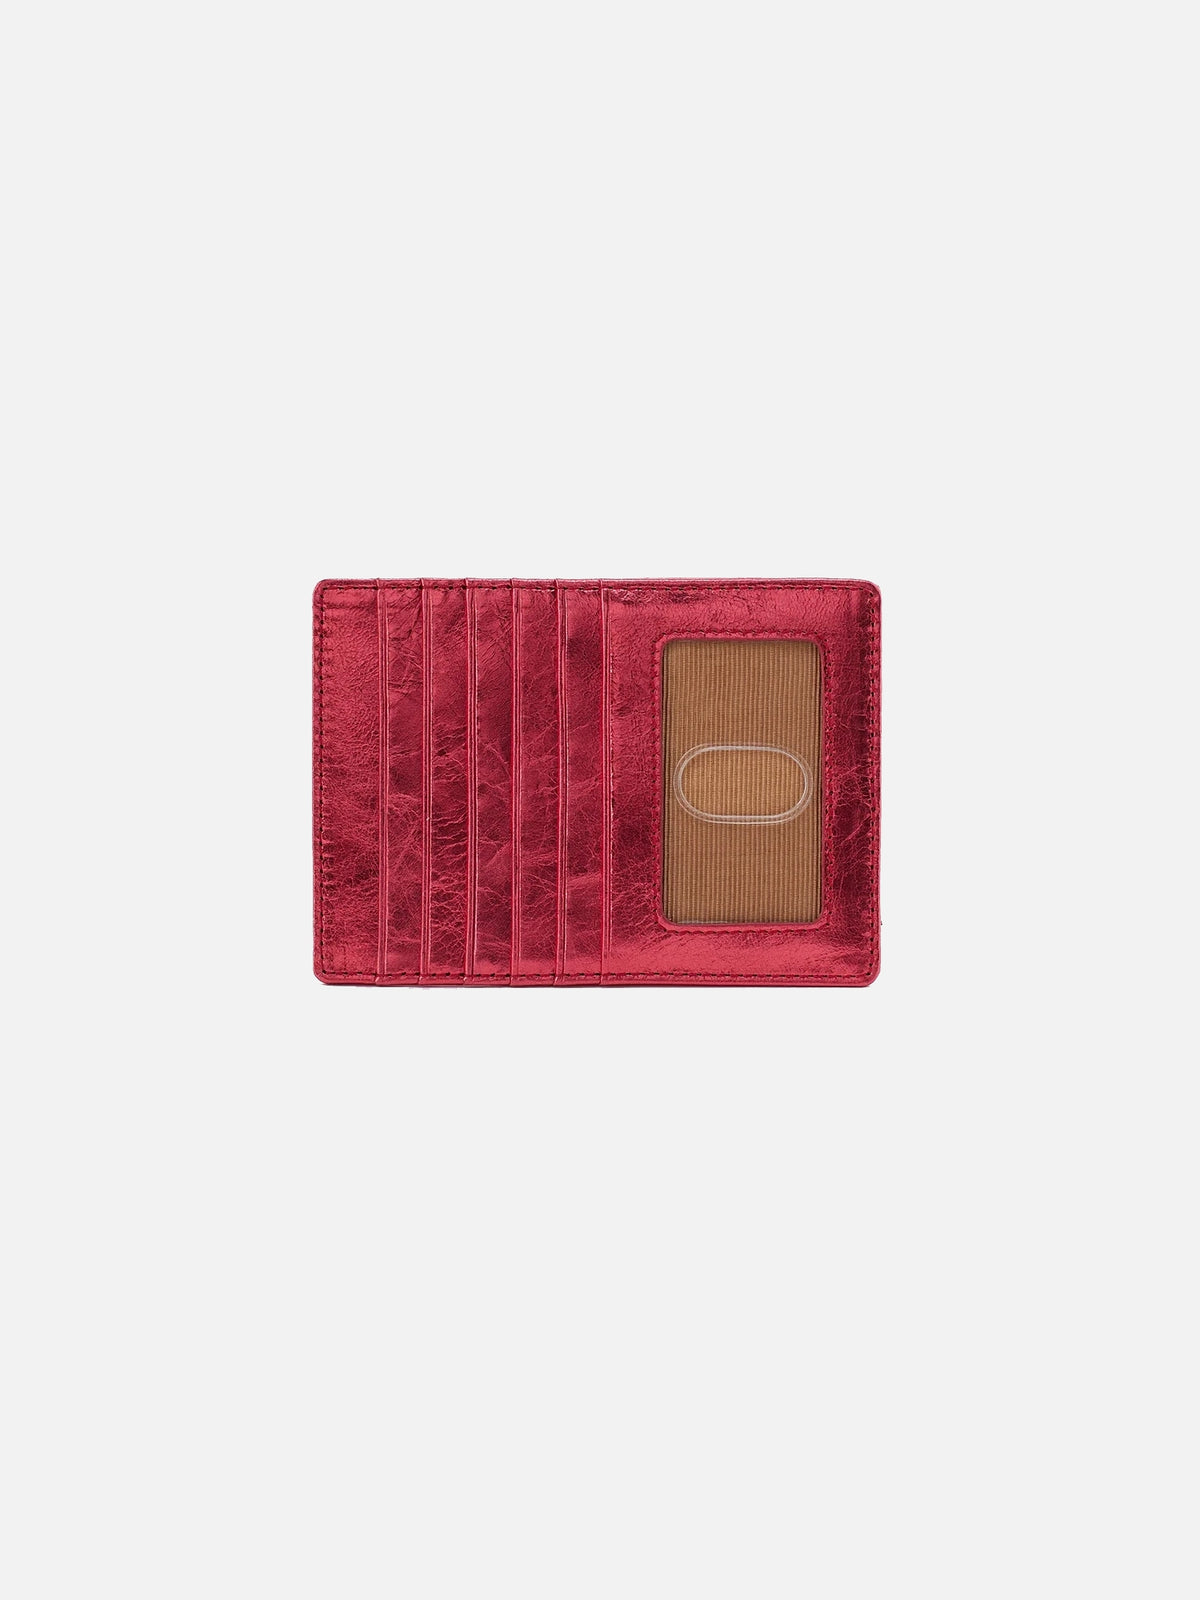 hobo euro slide metallic leather card holder in strawberry fields